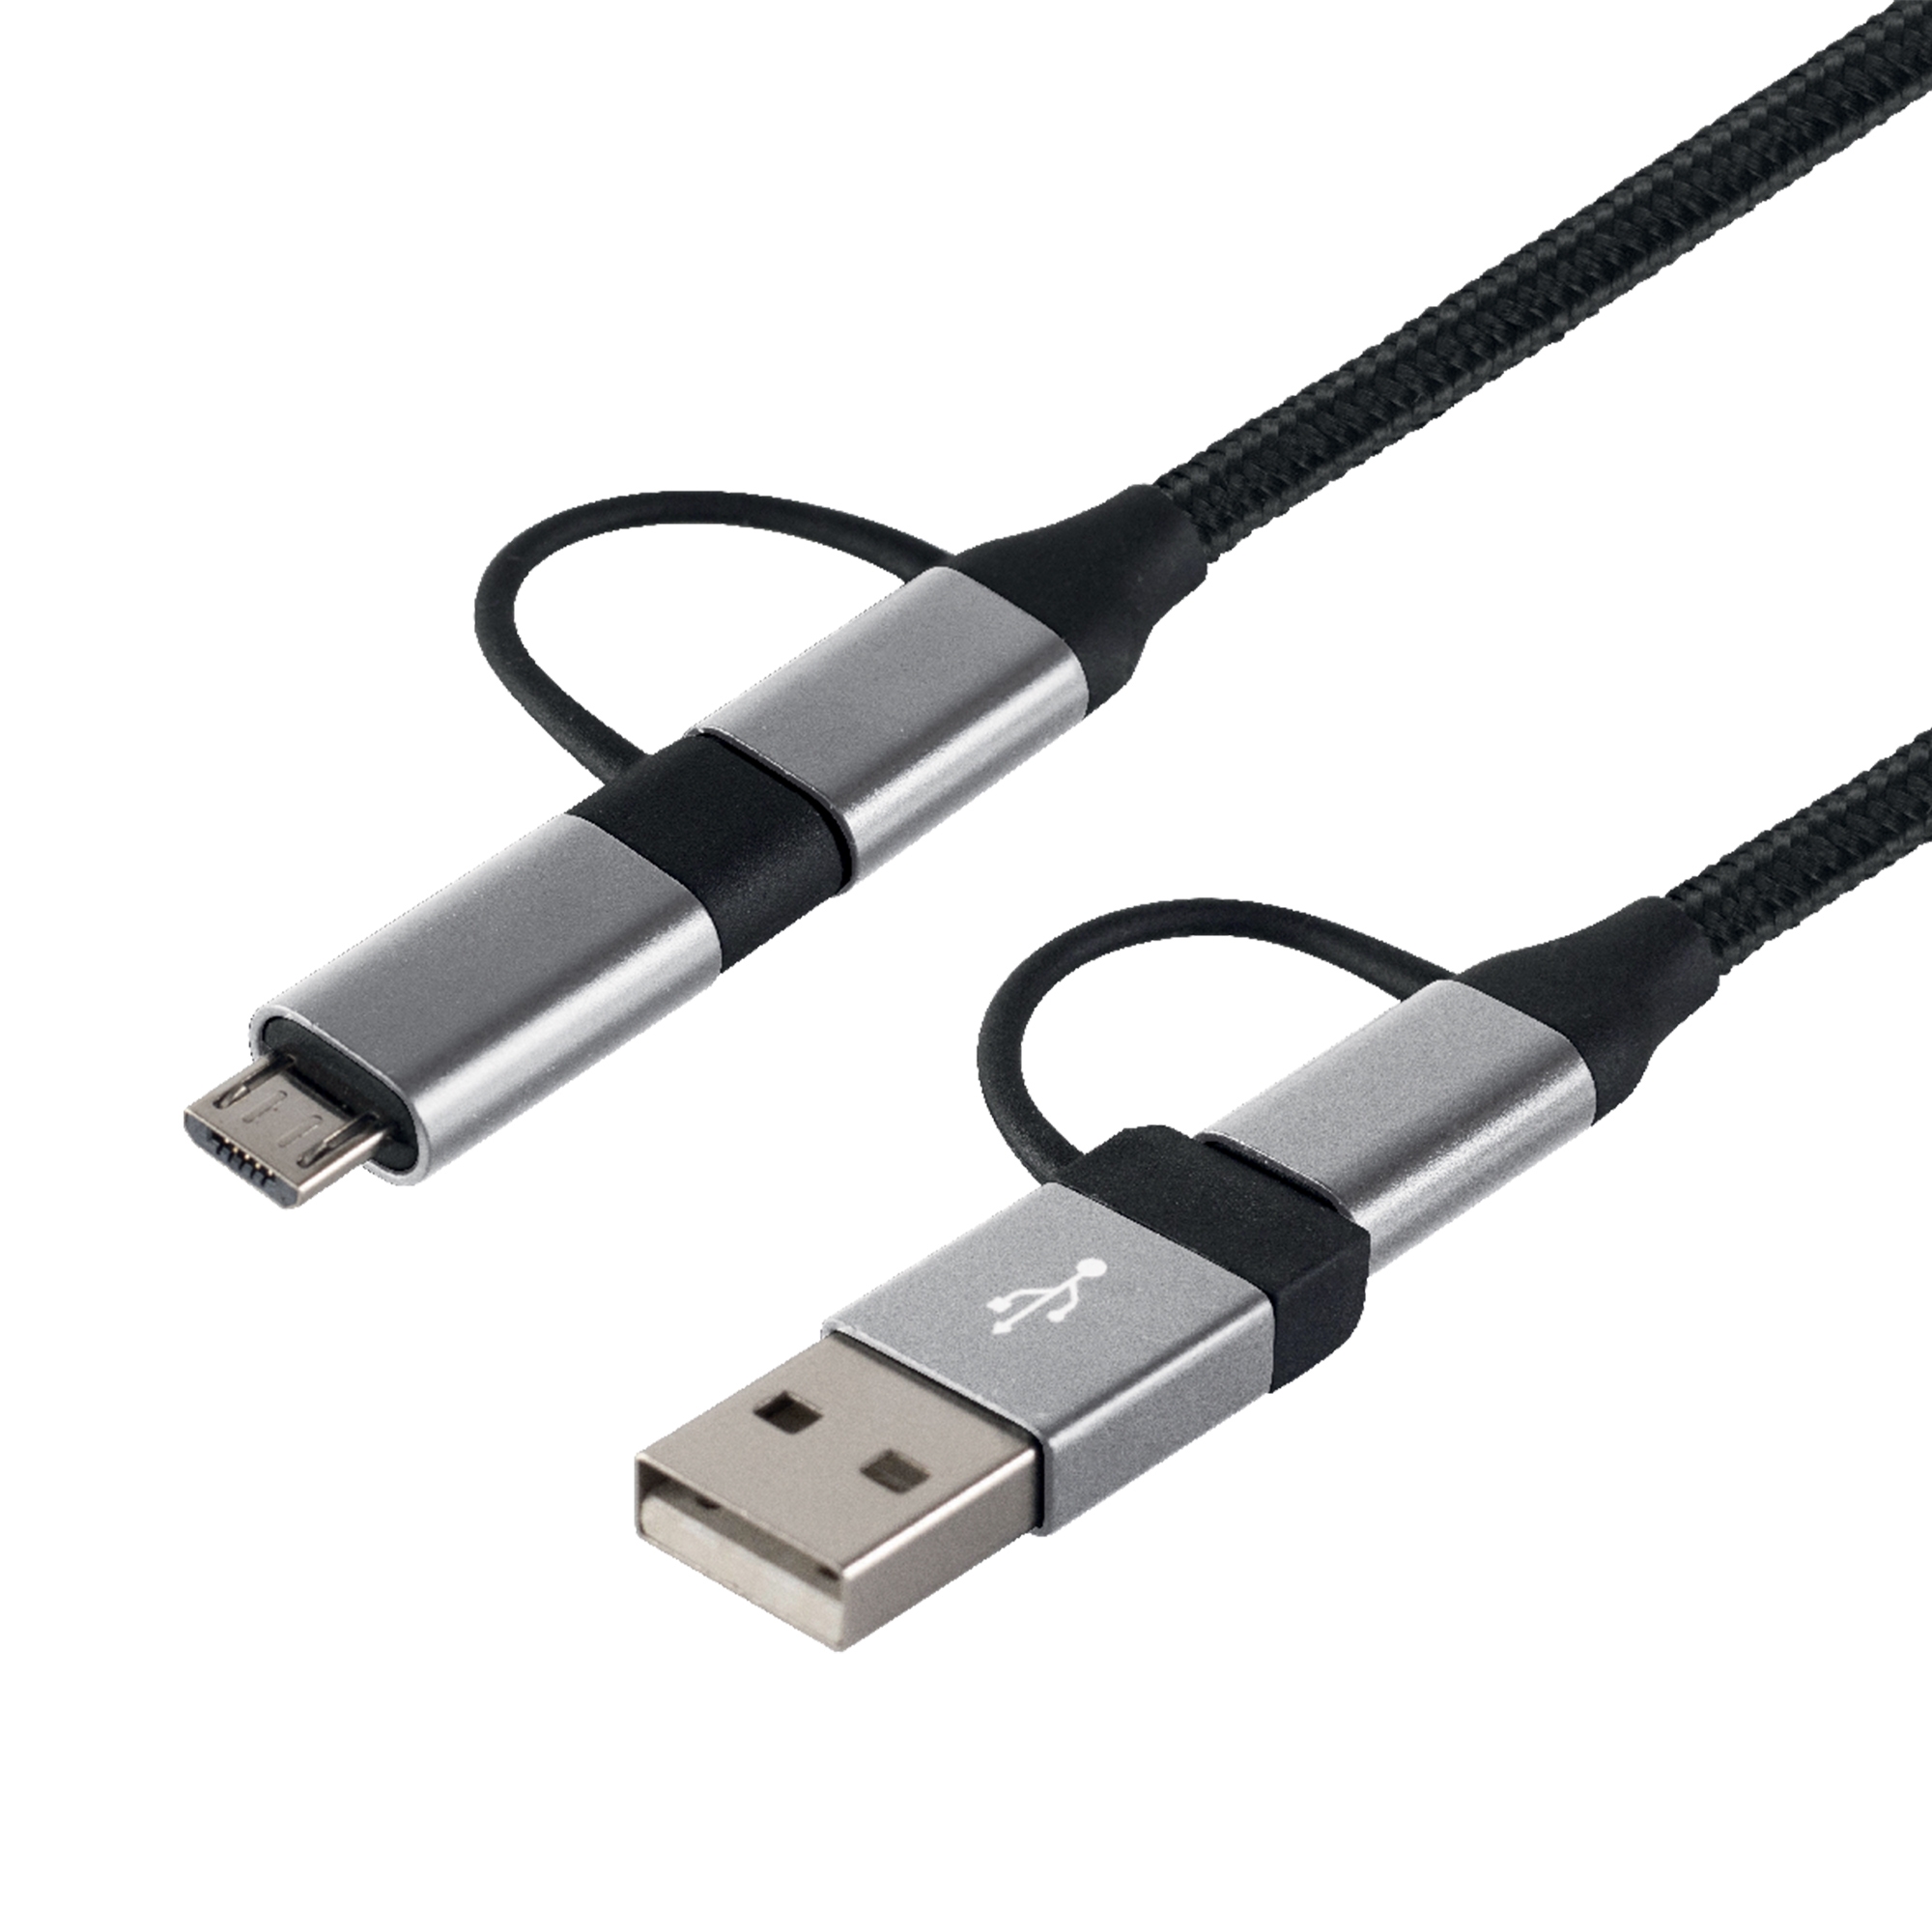 Cablu de incarcare USB Multi 4 in 1, tip C-C, C-micro, C-A, A-micro, 3 A, 1.5 m